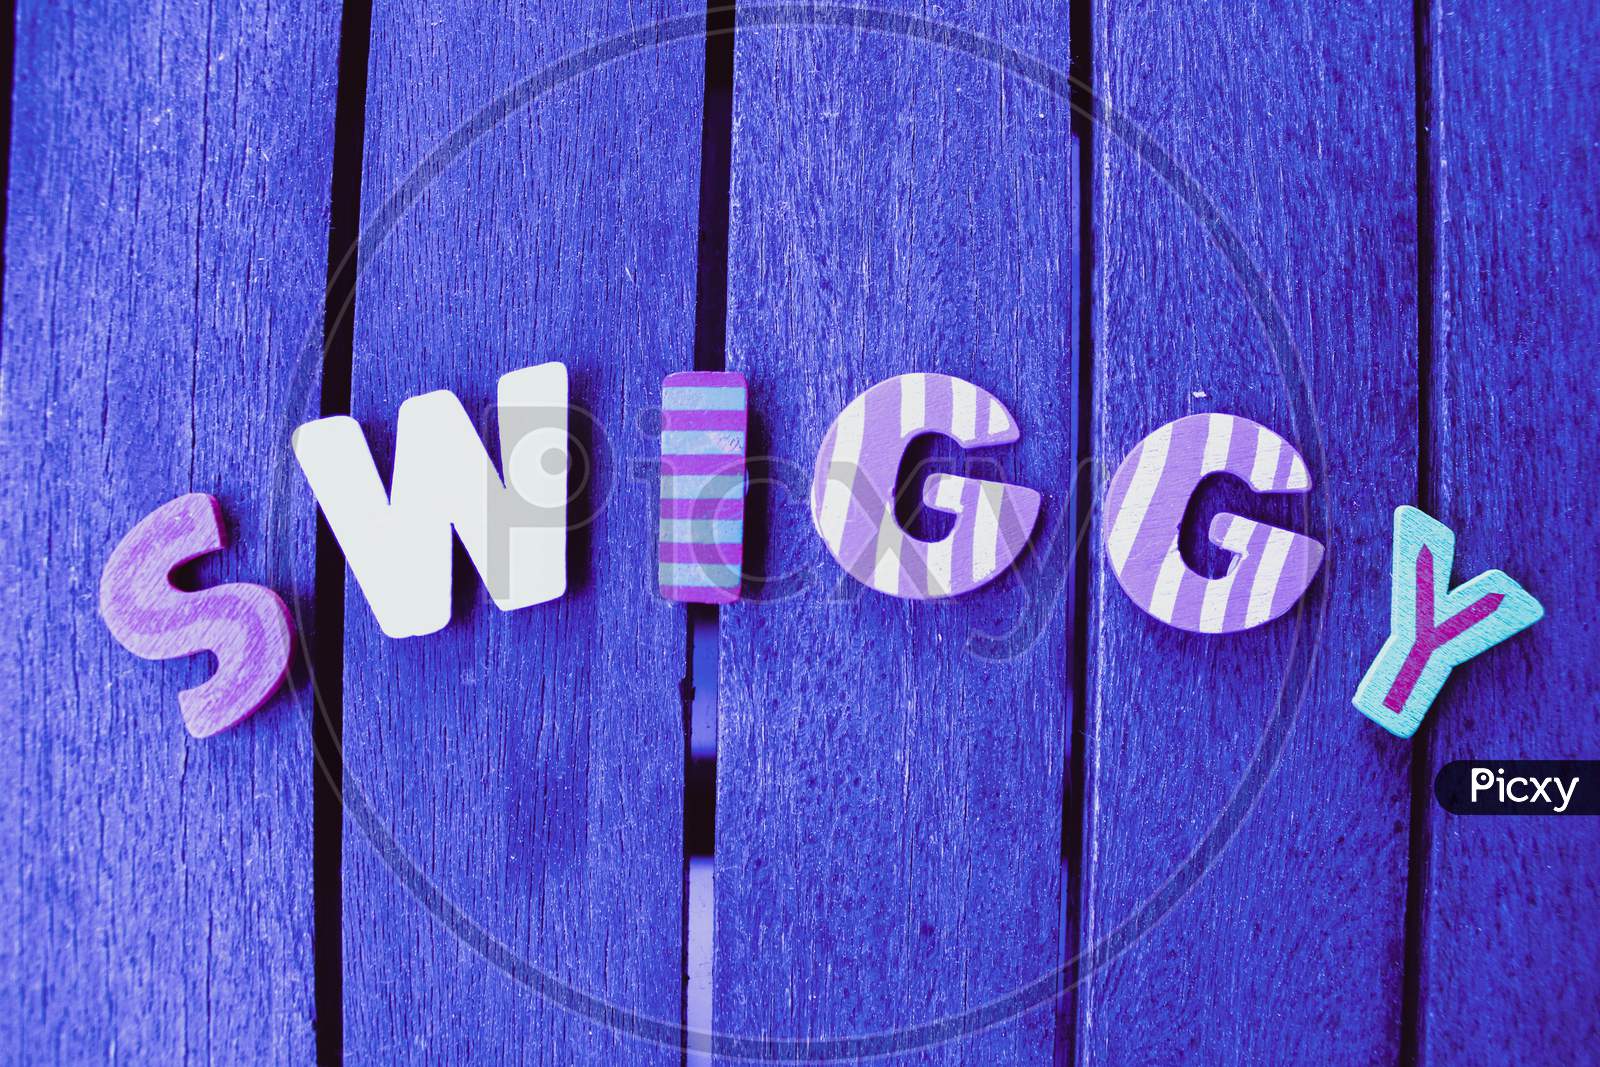 Swiggy Letters App On Wood Background